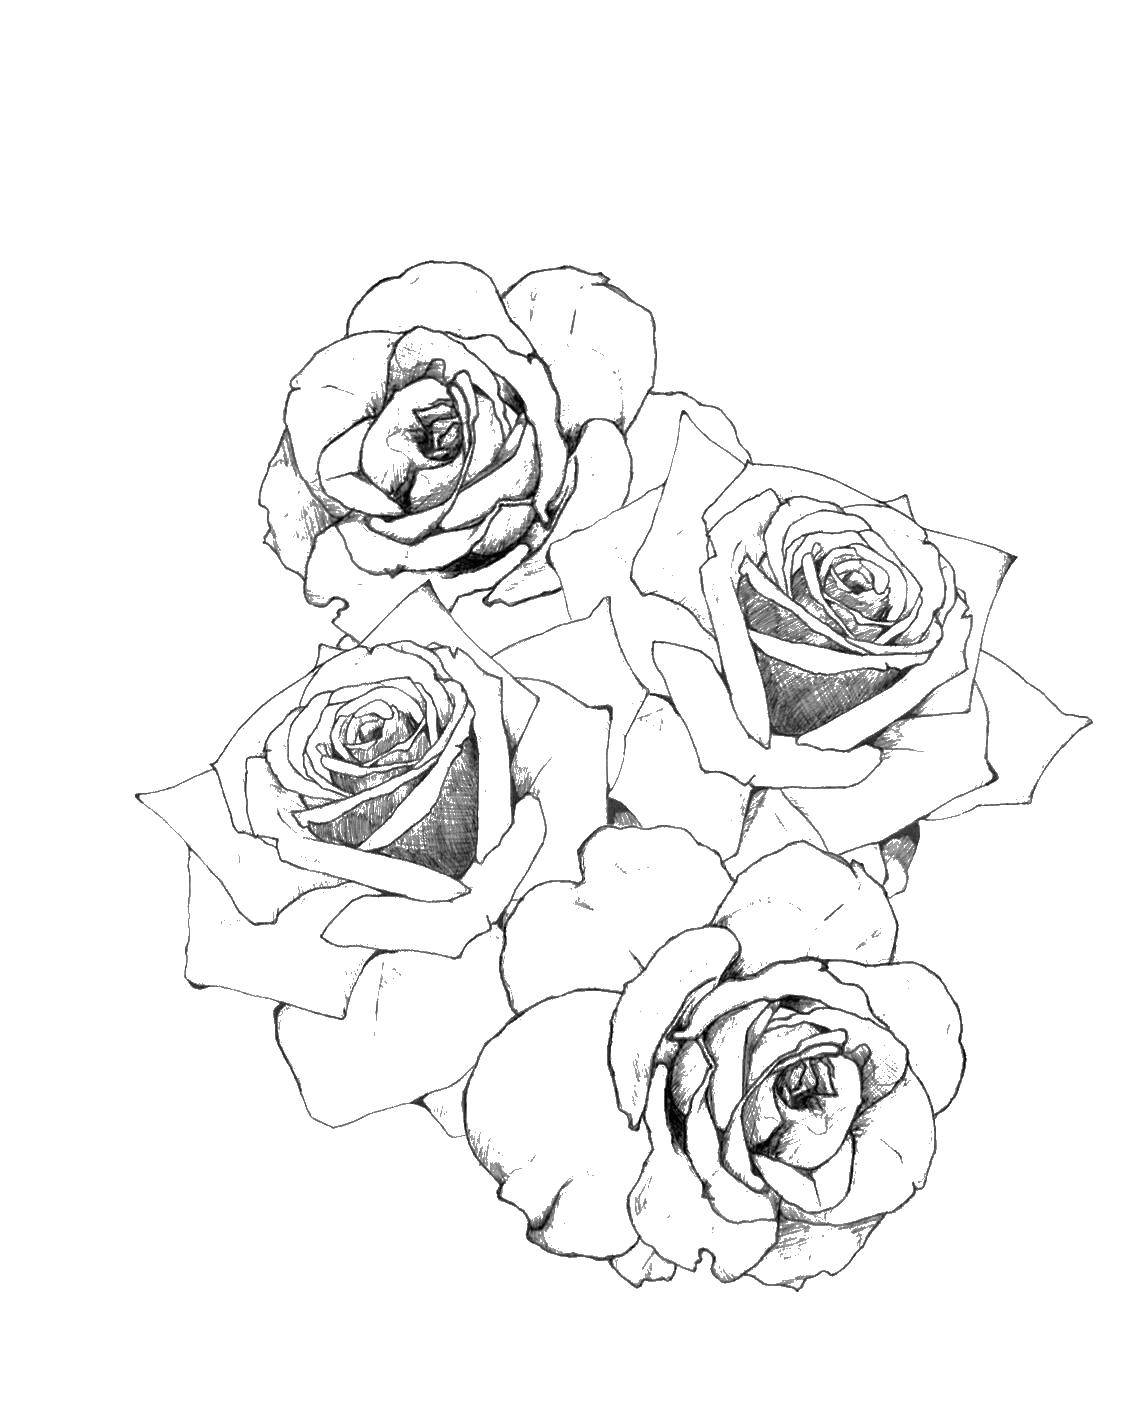 Coloring Rose pencil. Category flowers. Tags:  rose, pencil, petals.